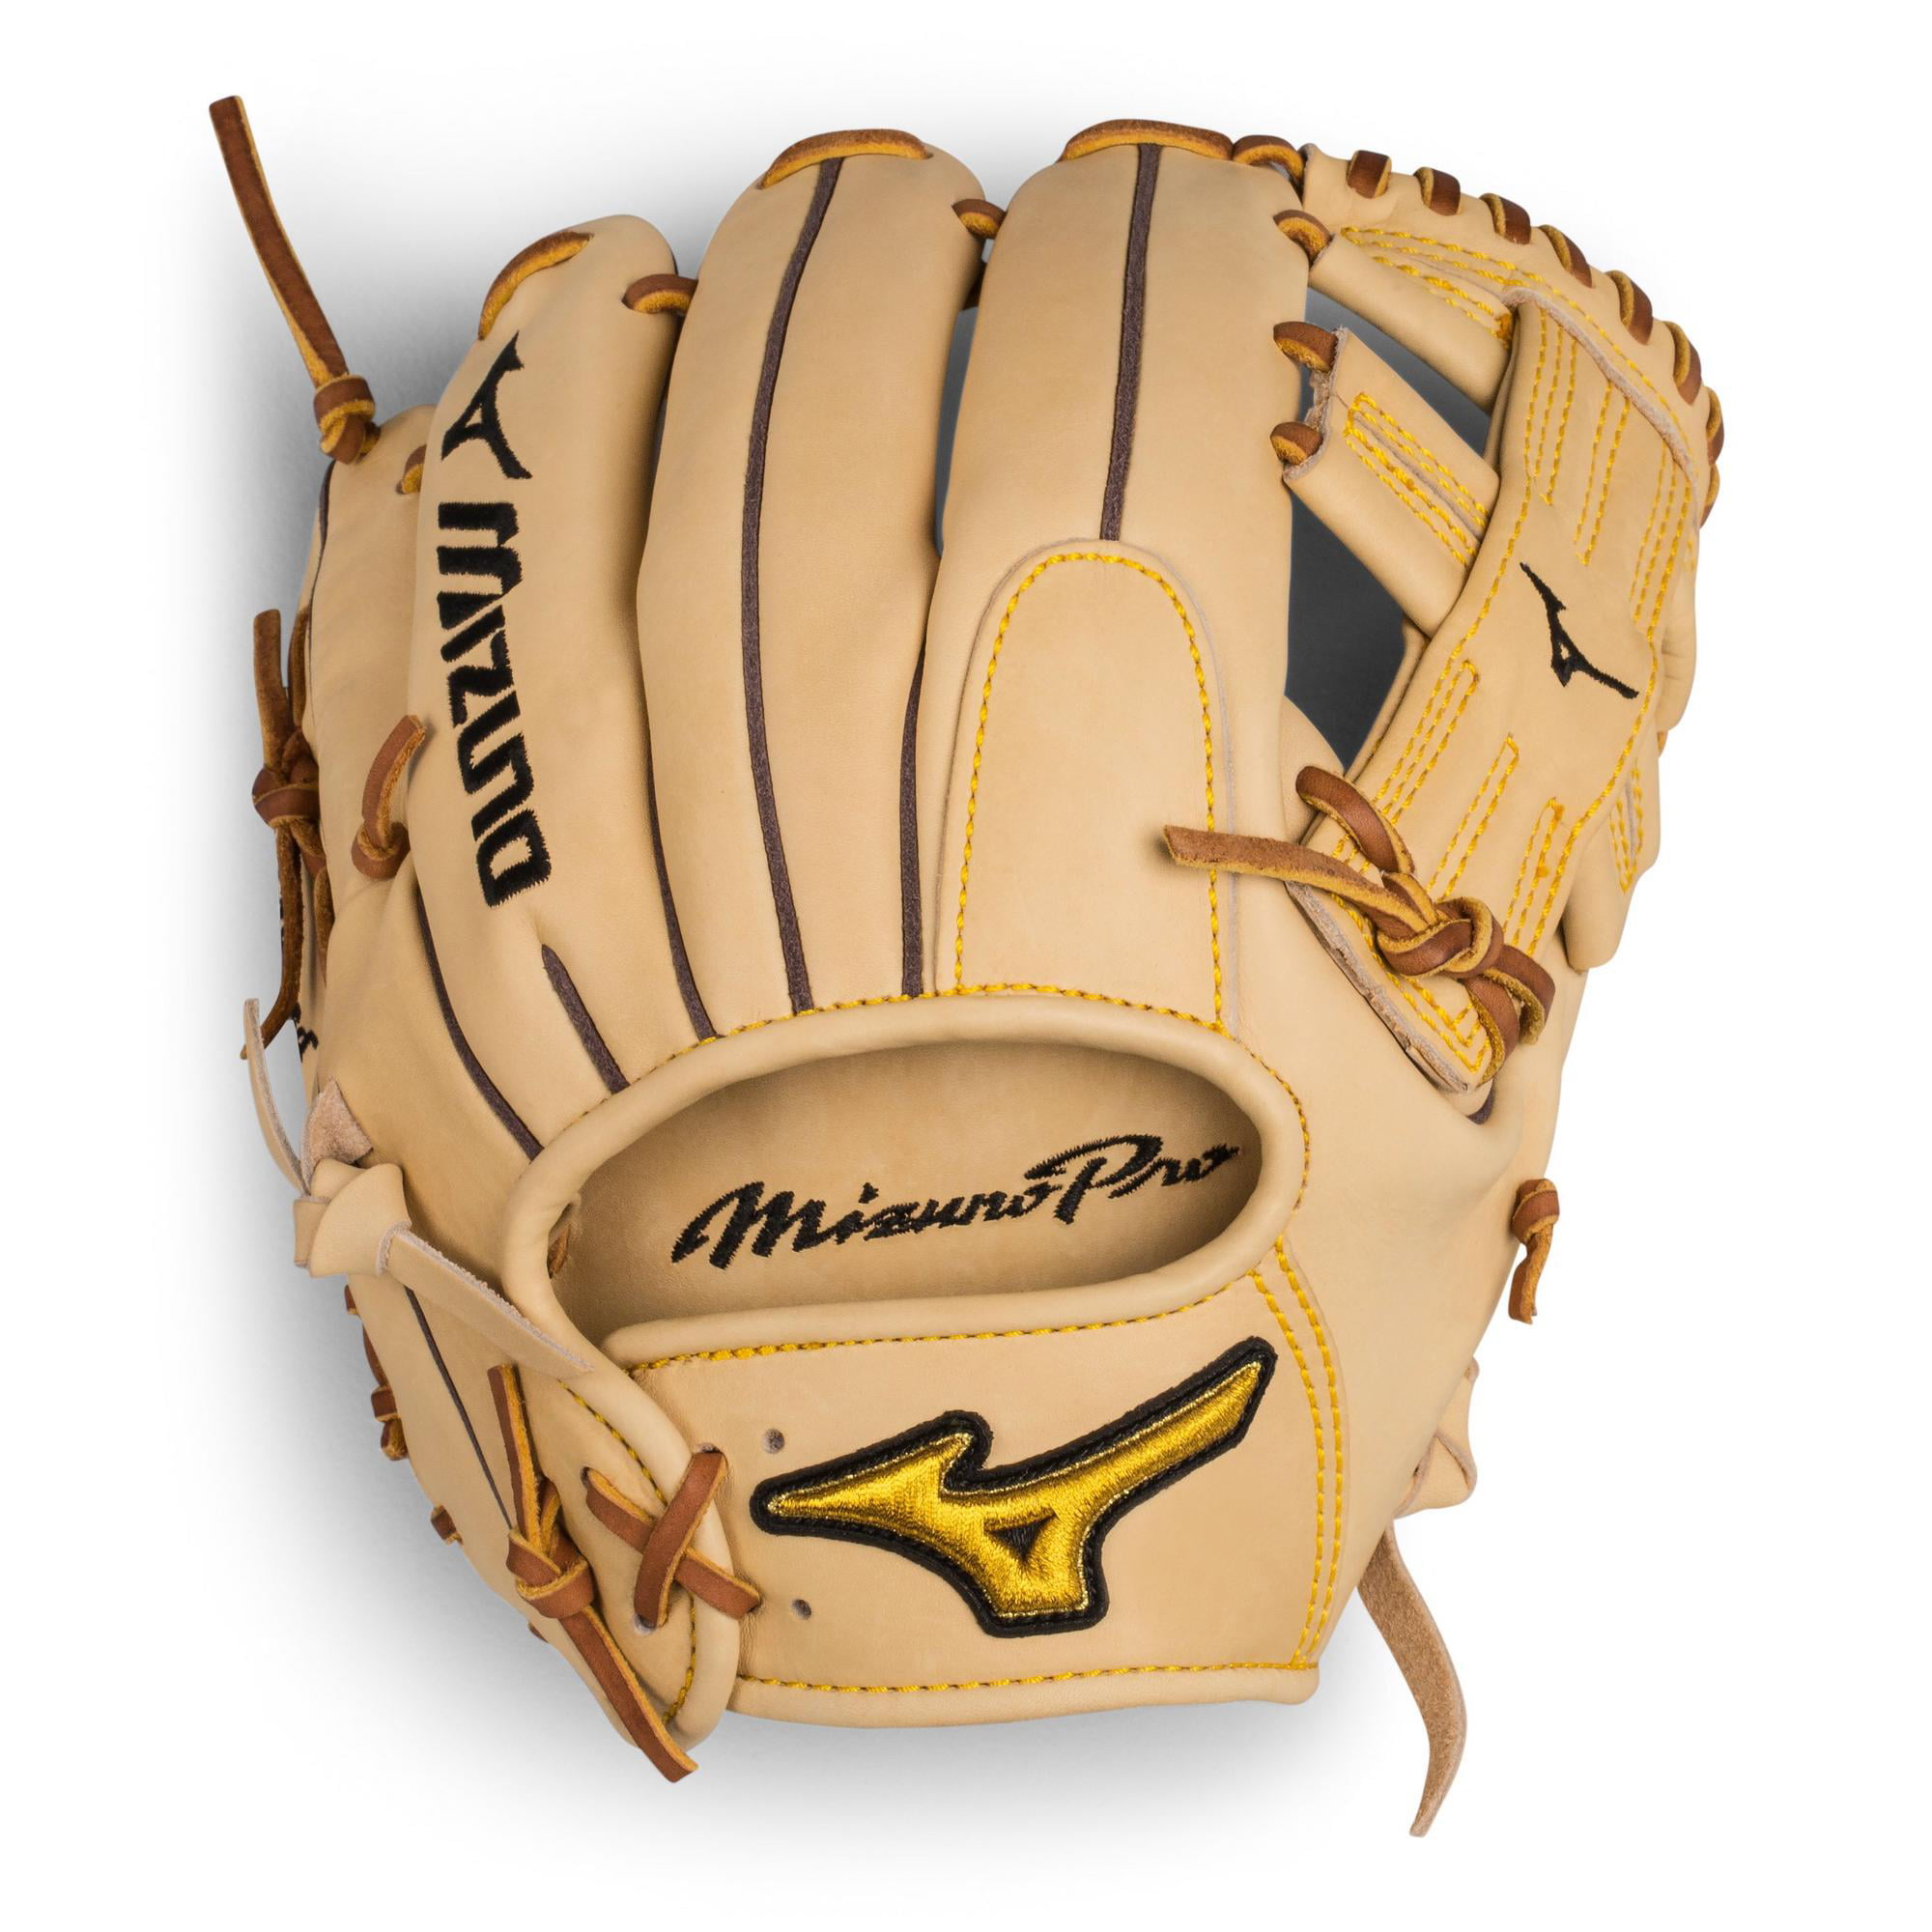 Mizuno Pro Infield Baseball Glove 11.5" - Regular Pocket, Right Hand Throw